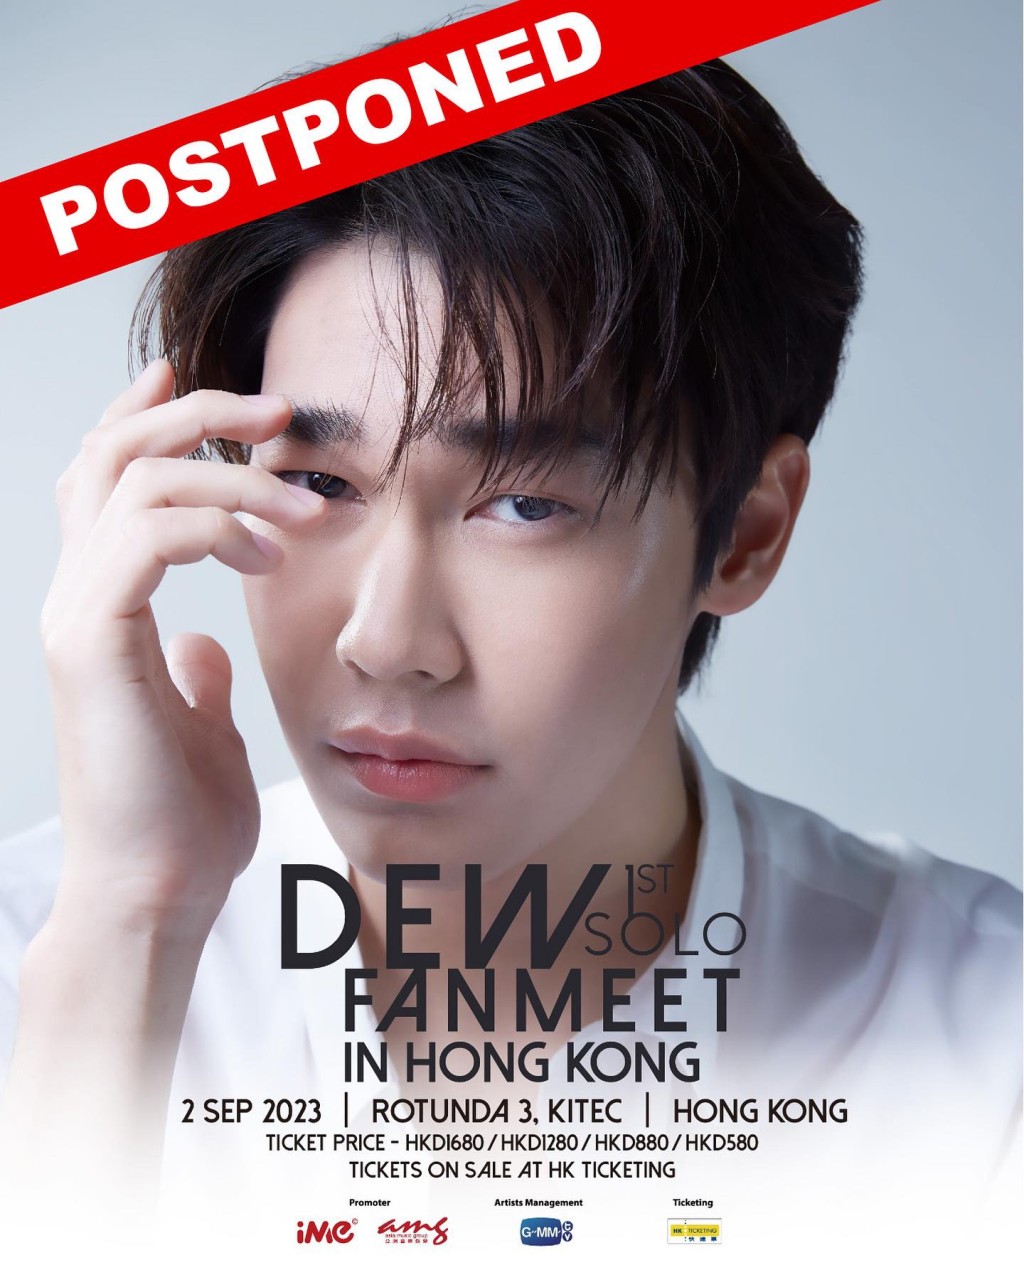 Dew的香港見面會已宣布延期。